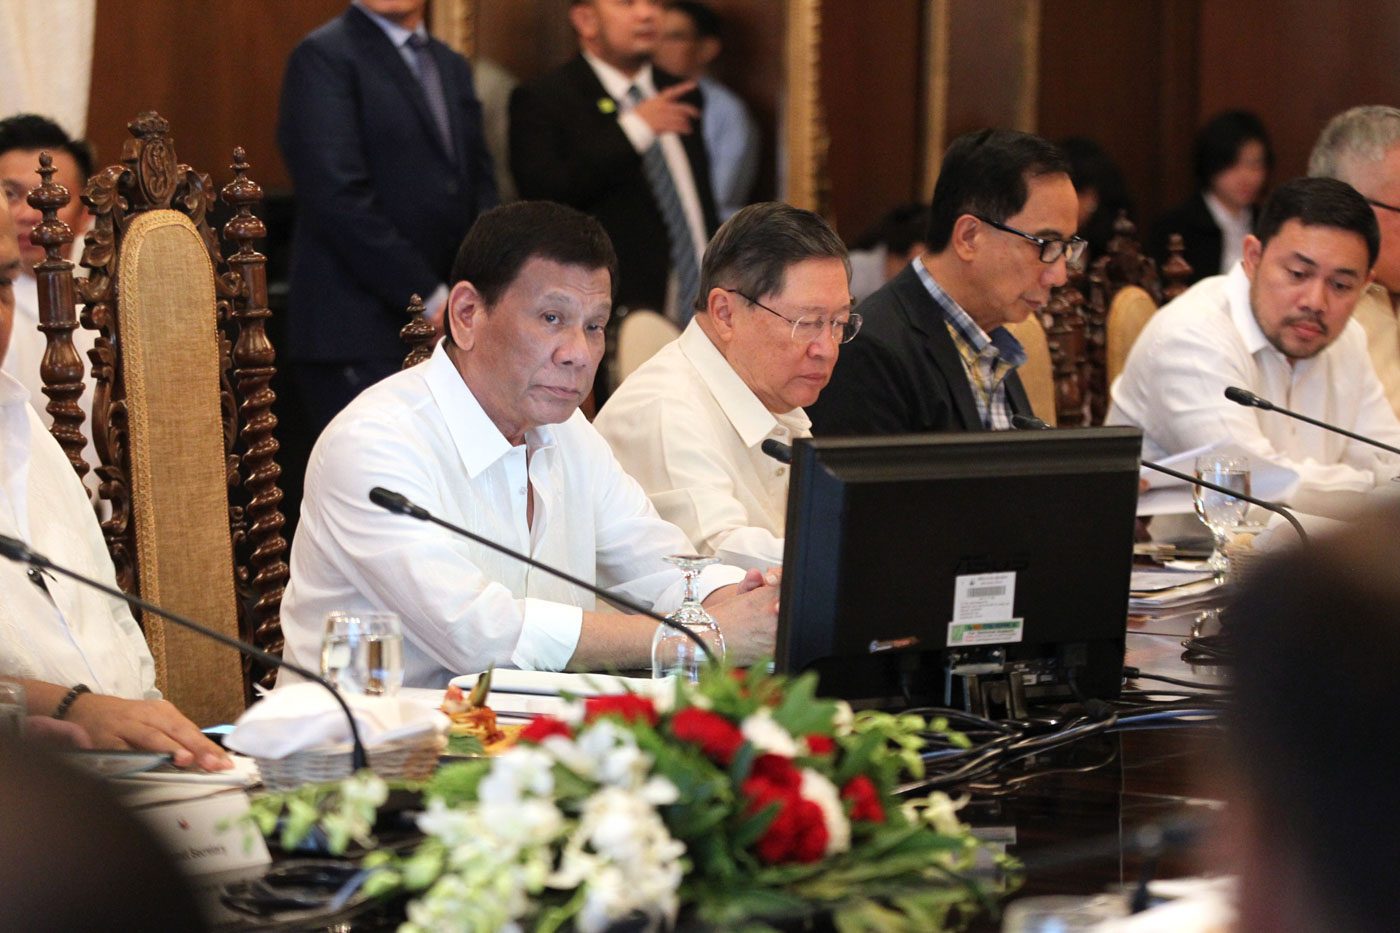 P8.2-B 2020 budget for Duterte’s office breezes through House panel